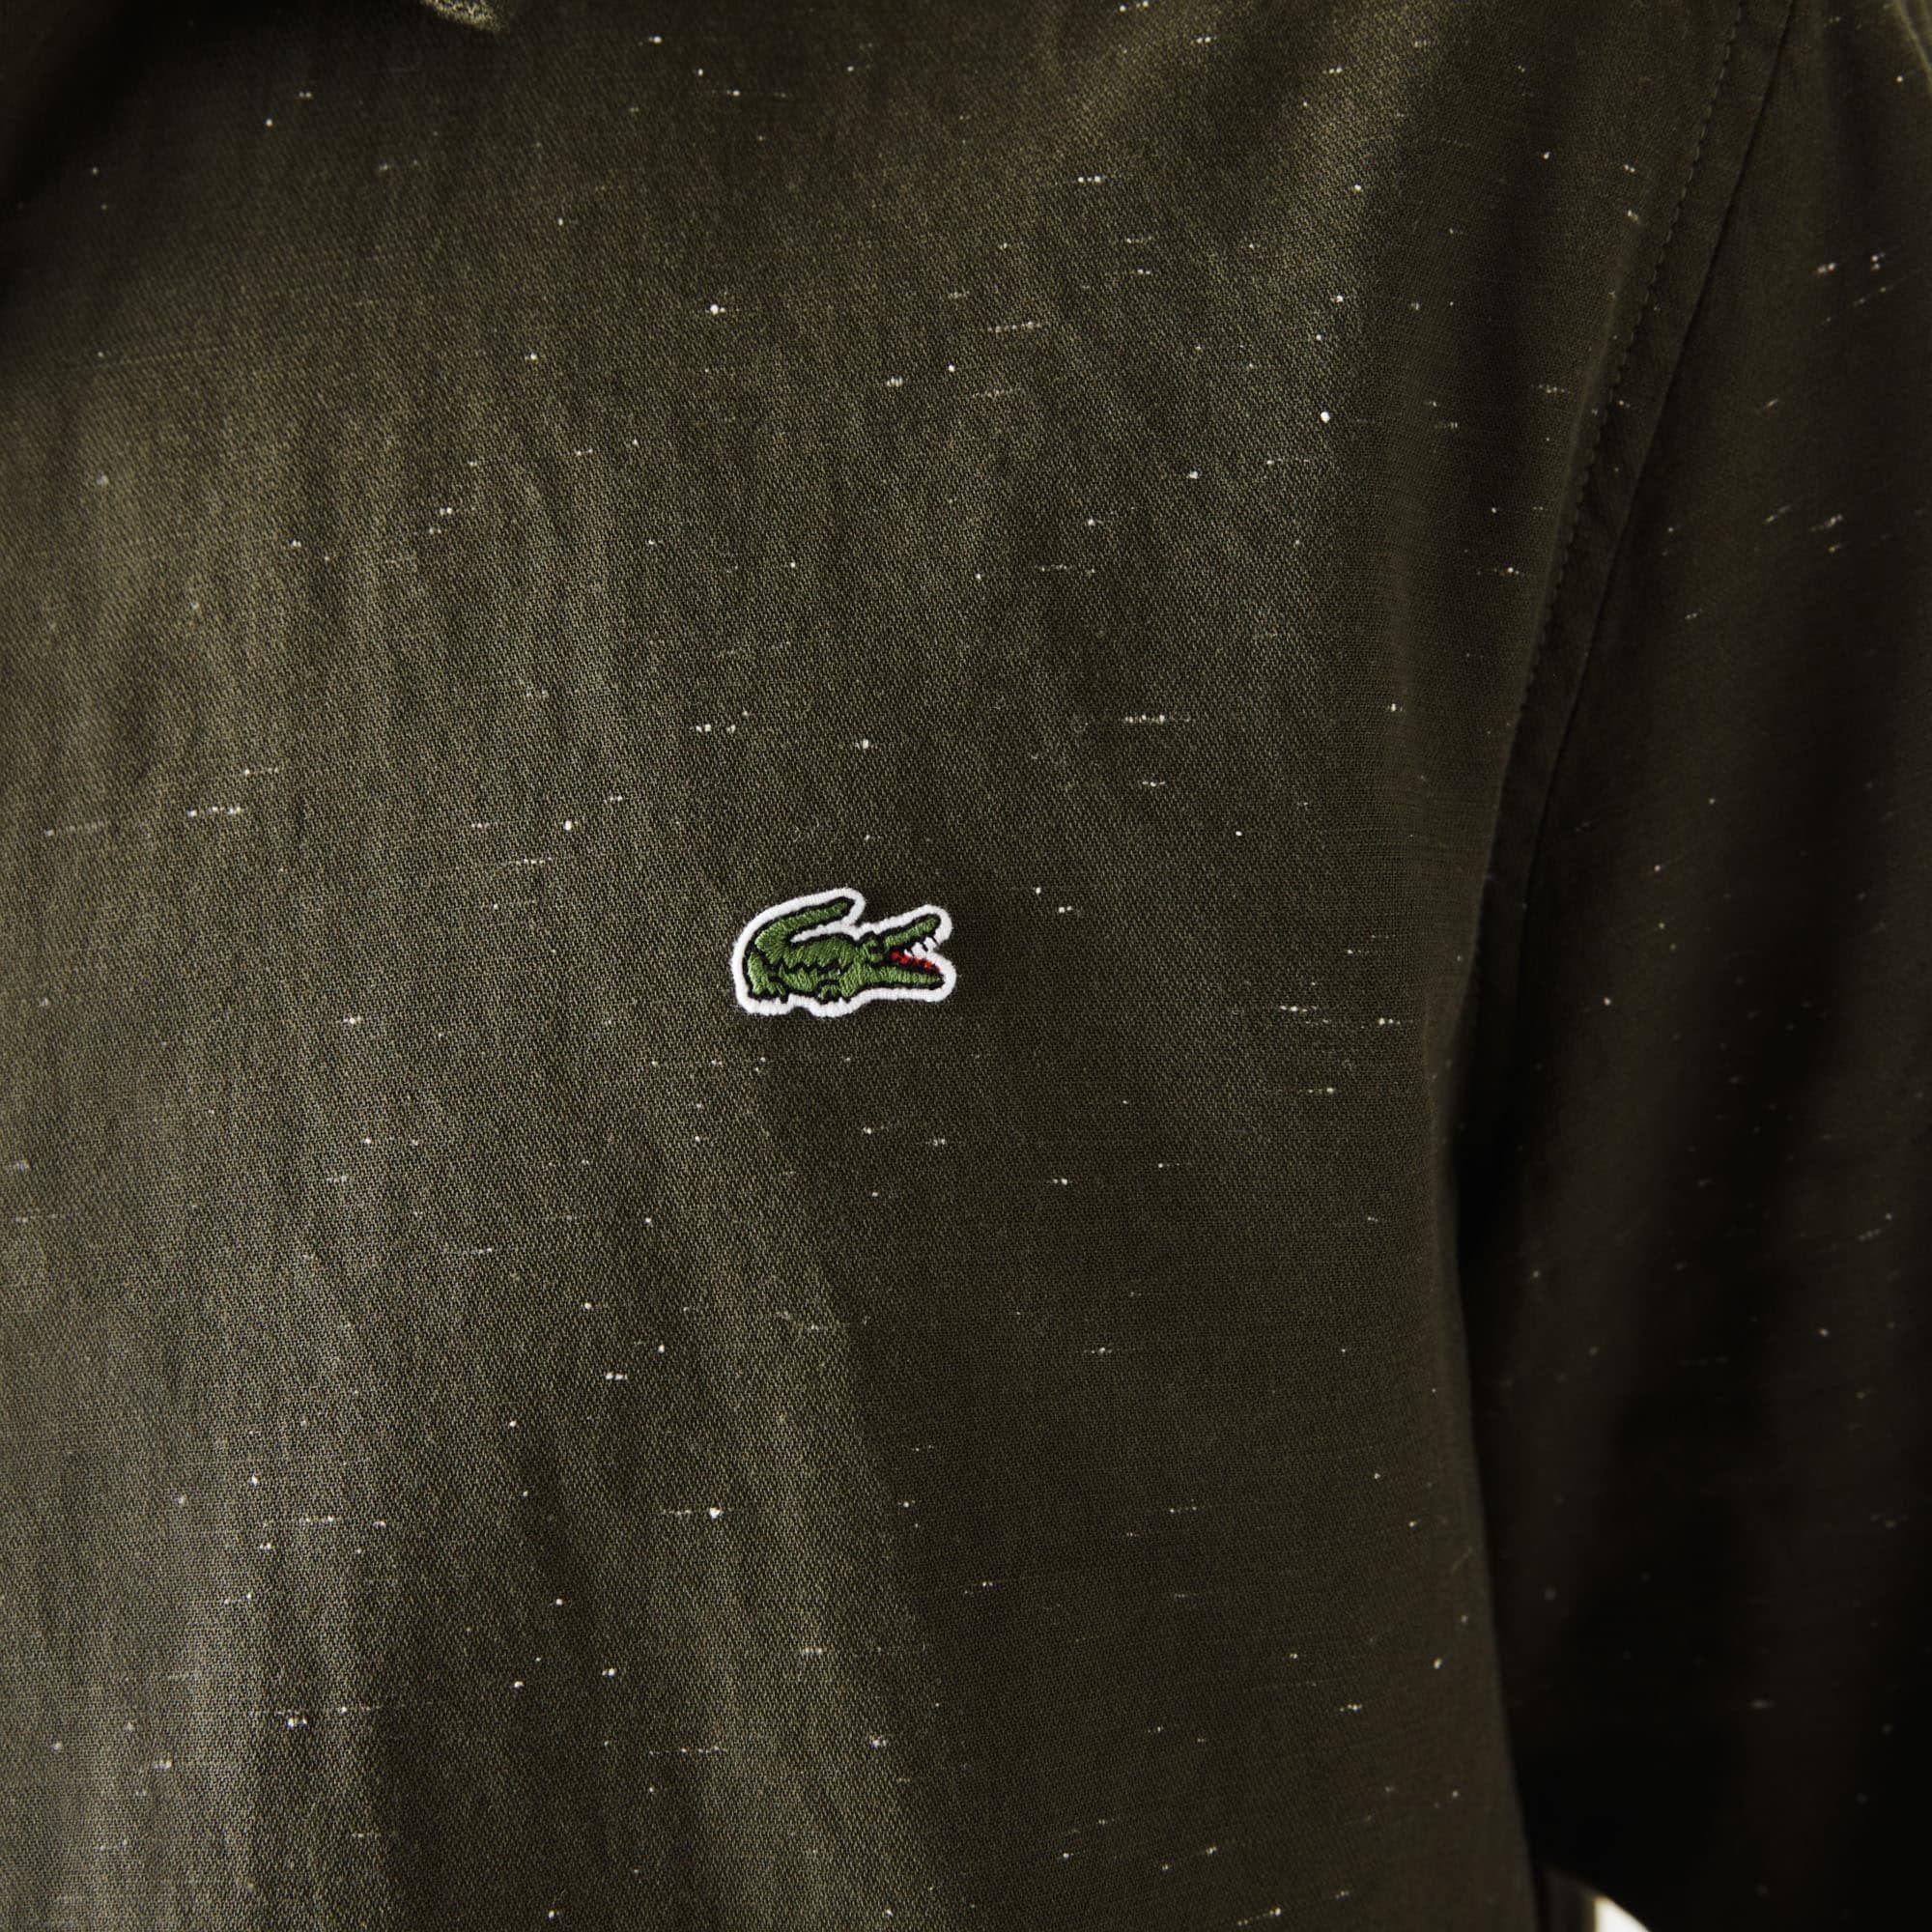  Lacoste Slim Fit Flamed Cotton Shirt - Khaki Green (Slim) 